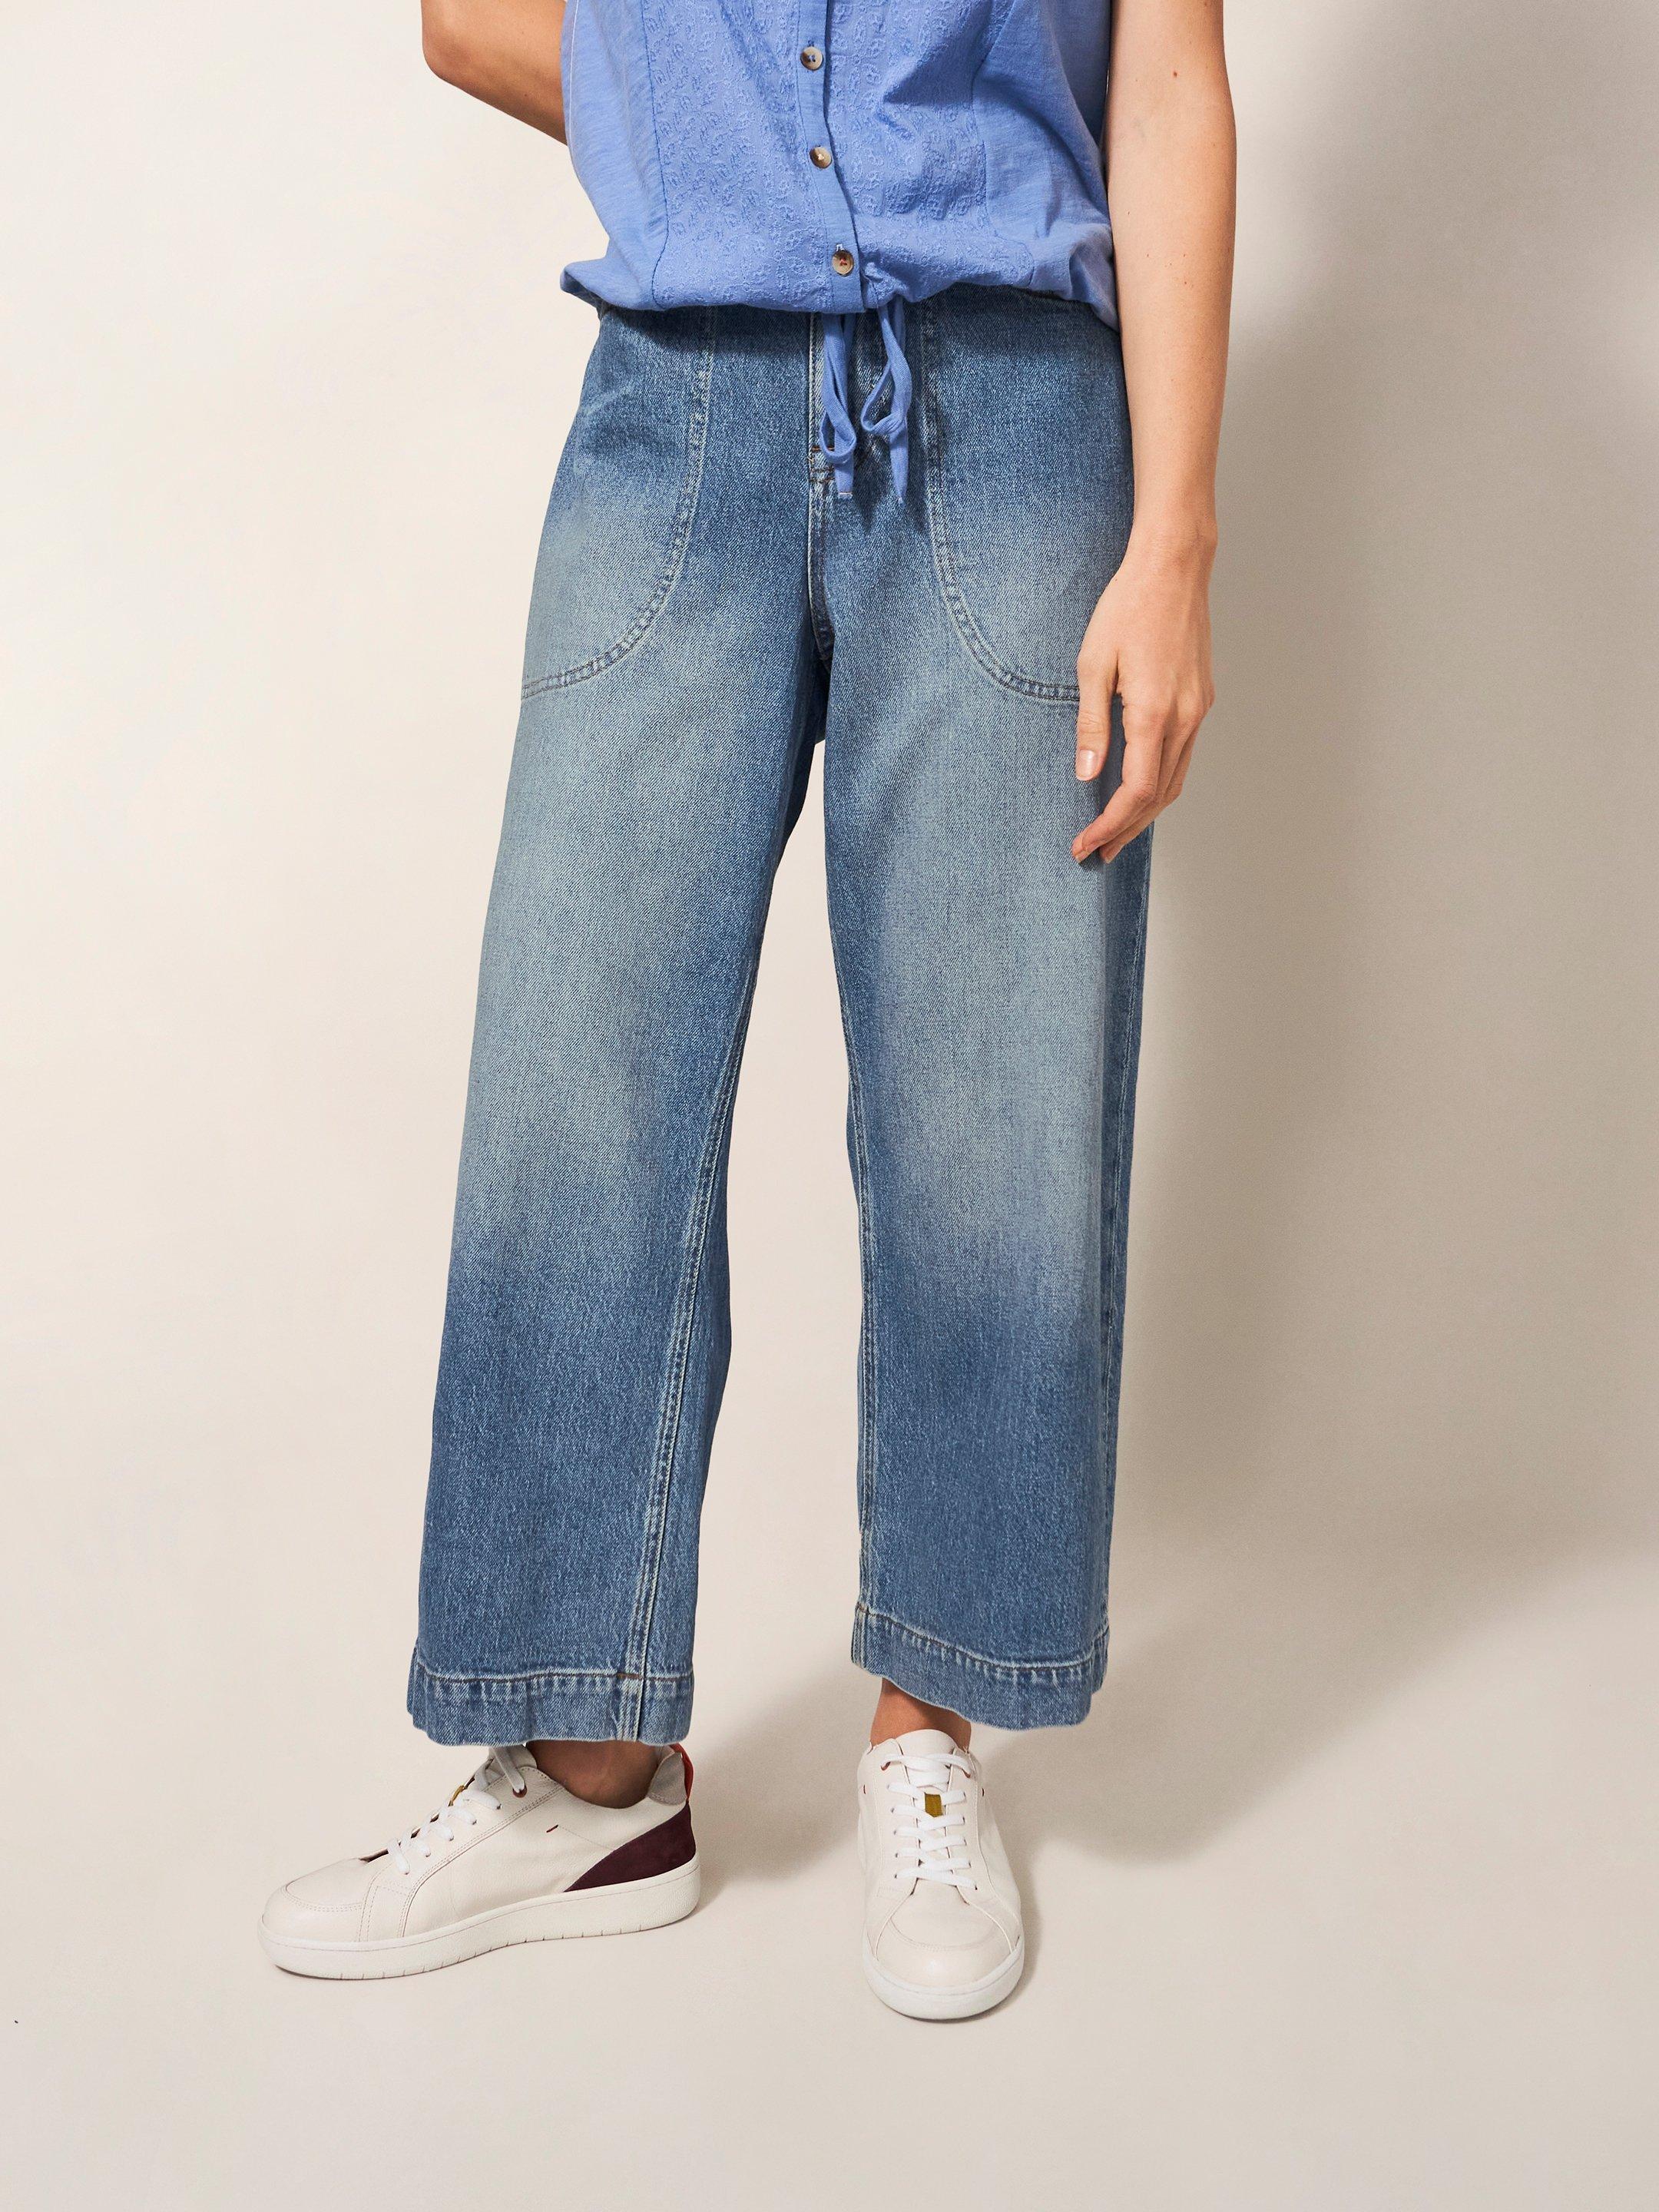 Tia Wide Leg Crop Jeans in LGT DENIM - LIFESTYLE